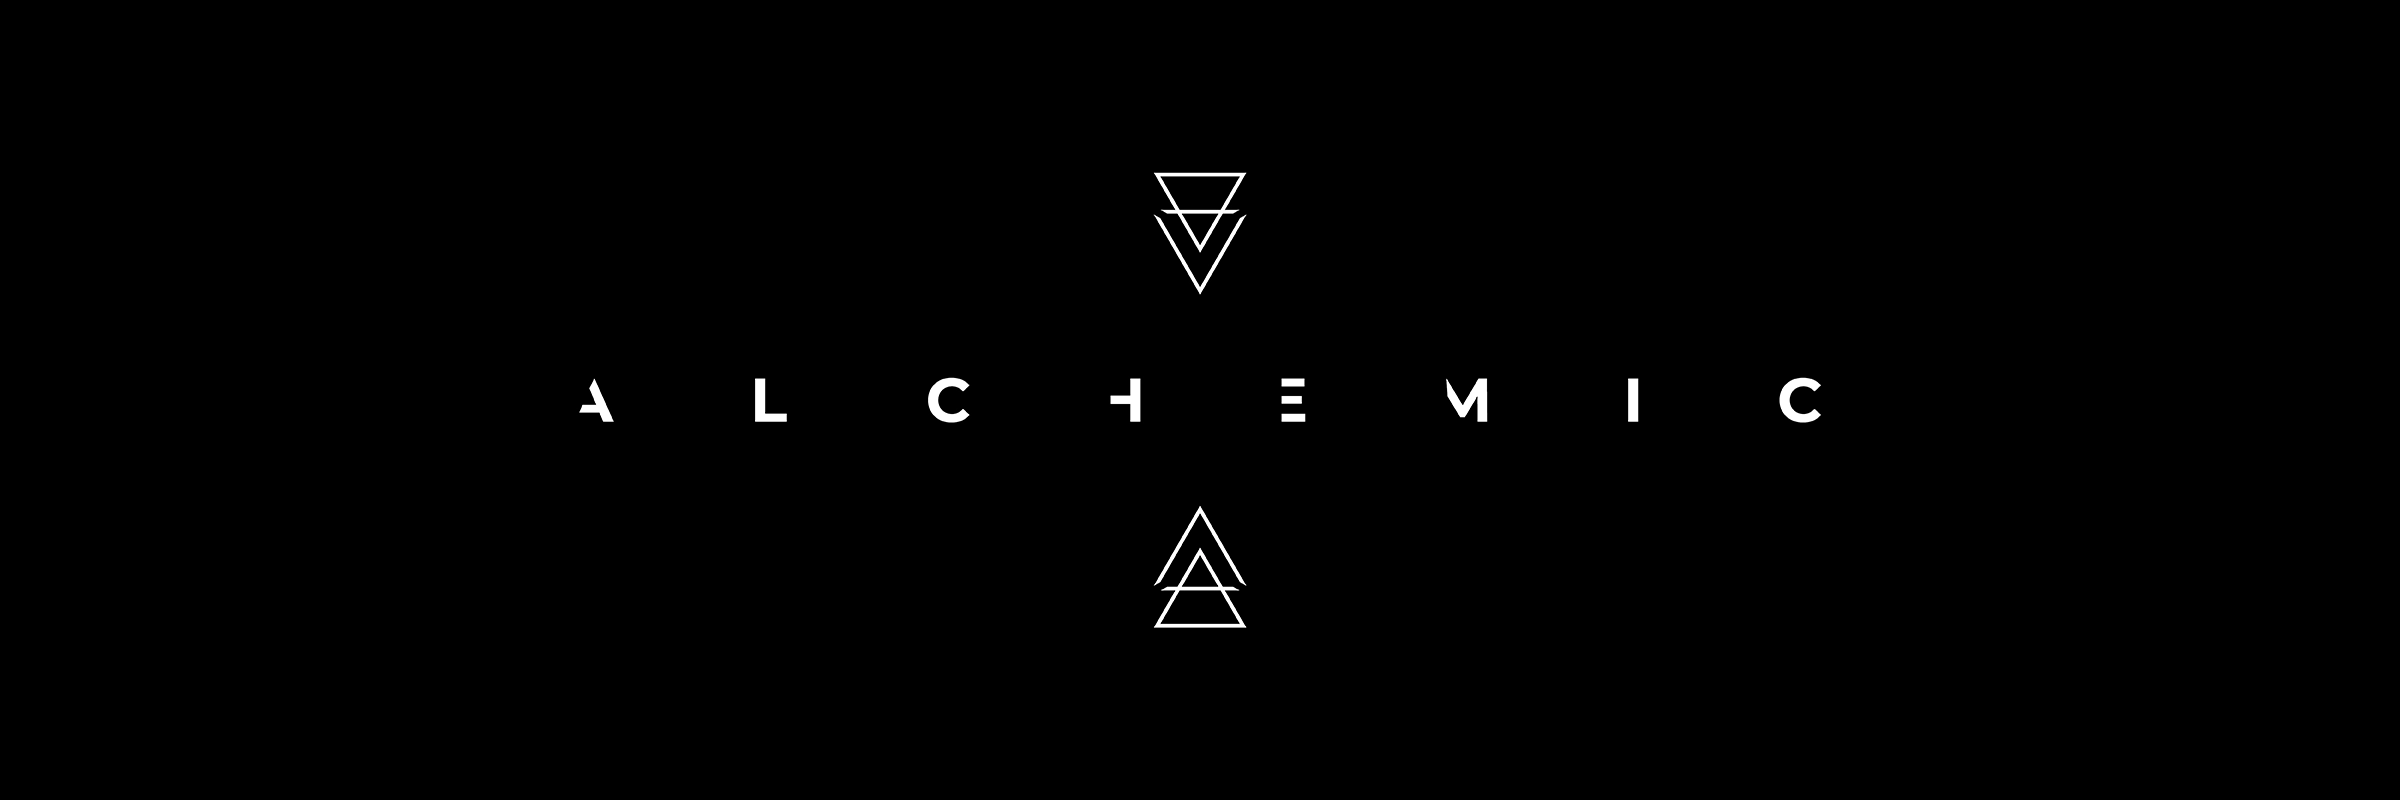 Alchemic-Logo-GK-1